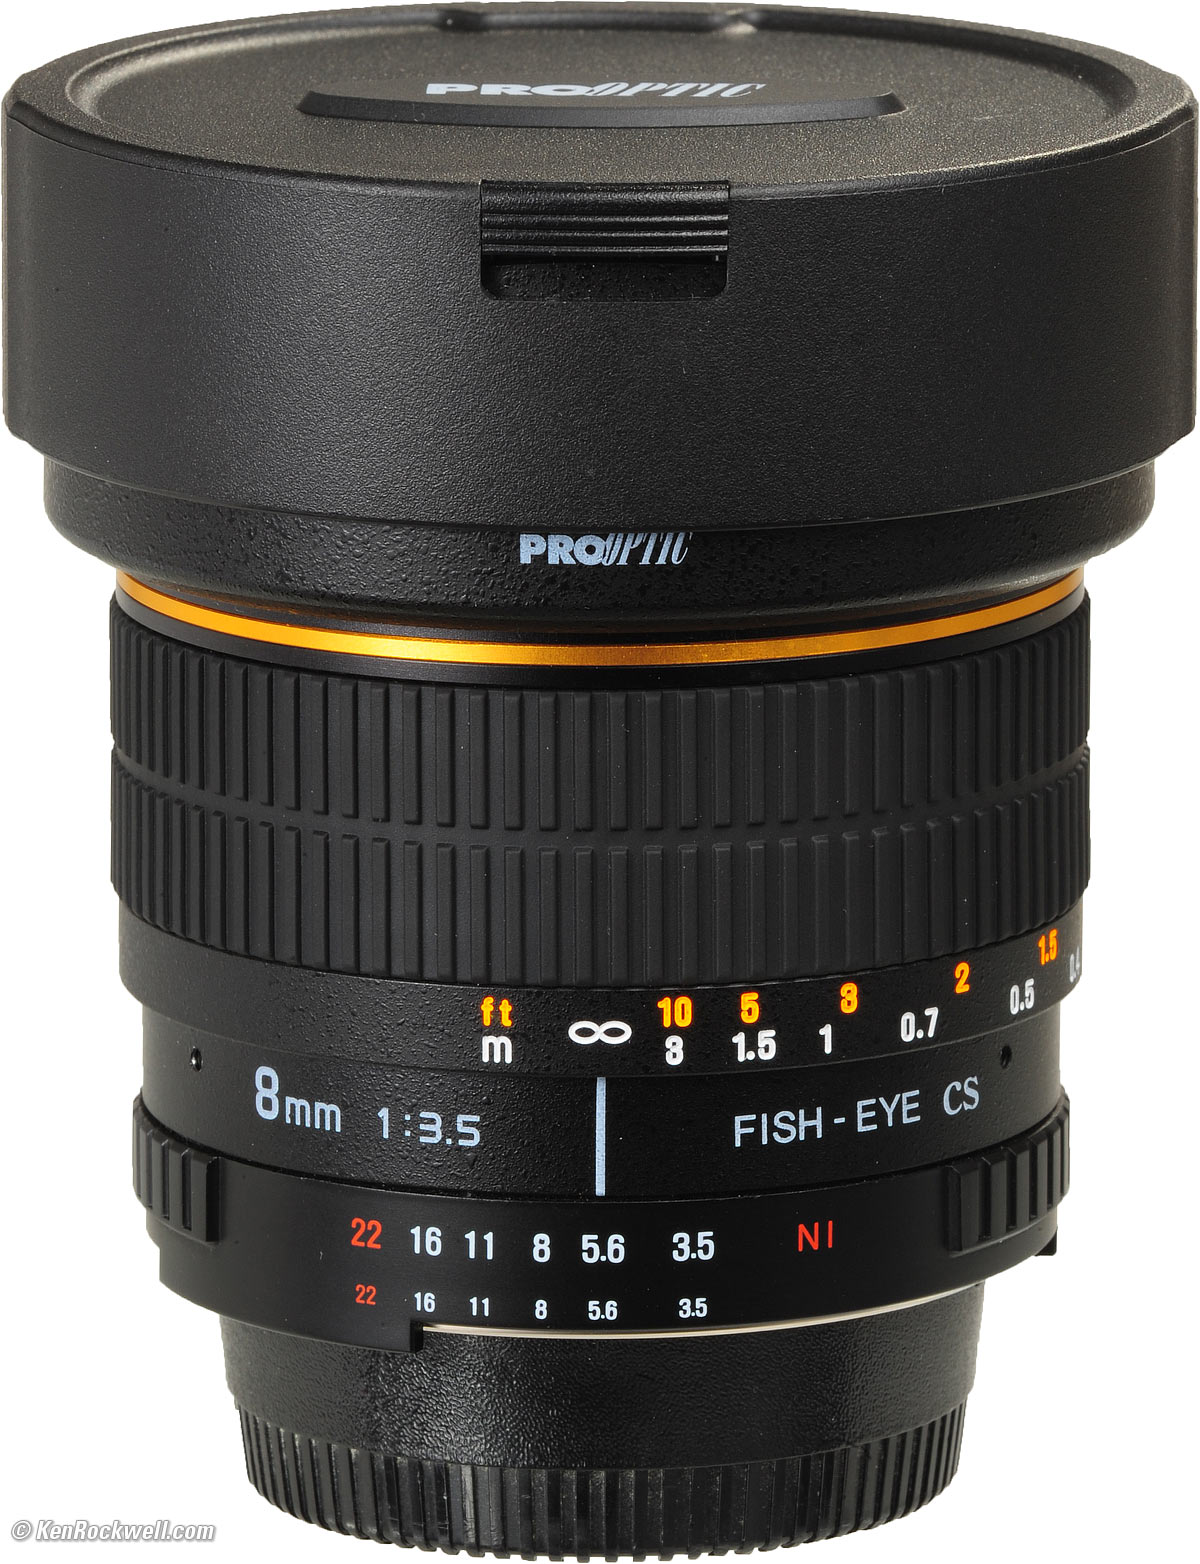 8mm f/3.5 Fisheye Lens: Samyang, Pro-Optic, Bower